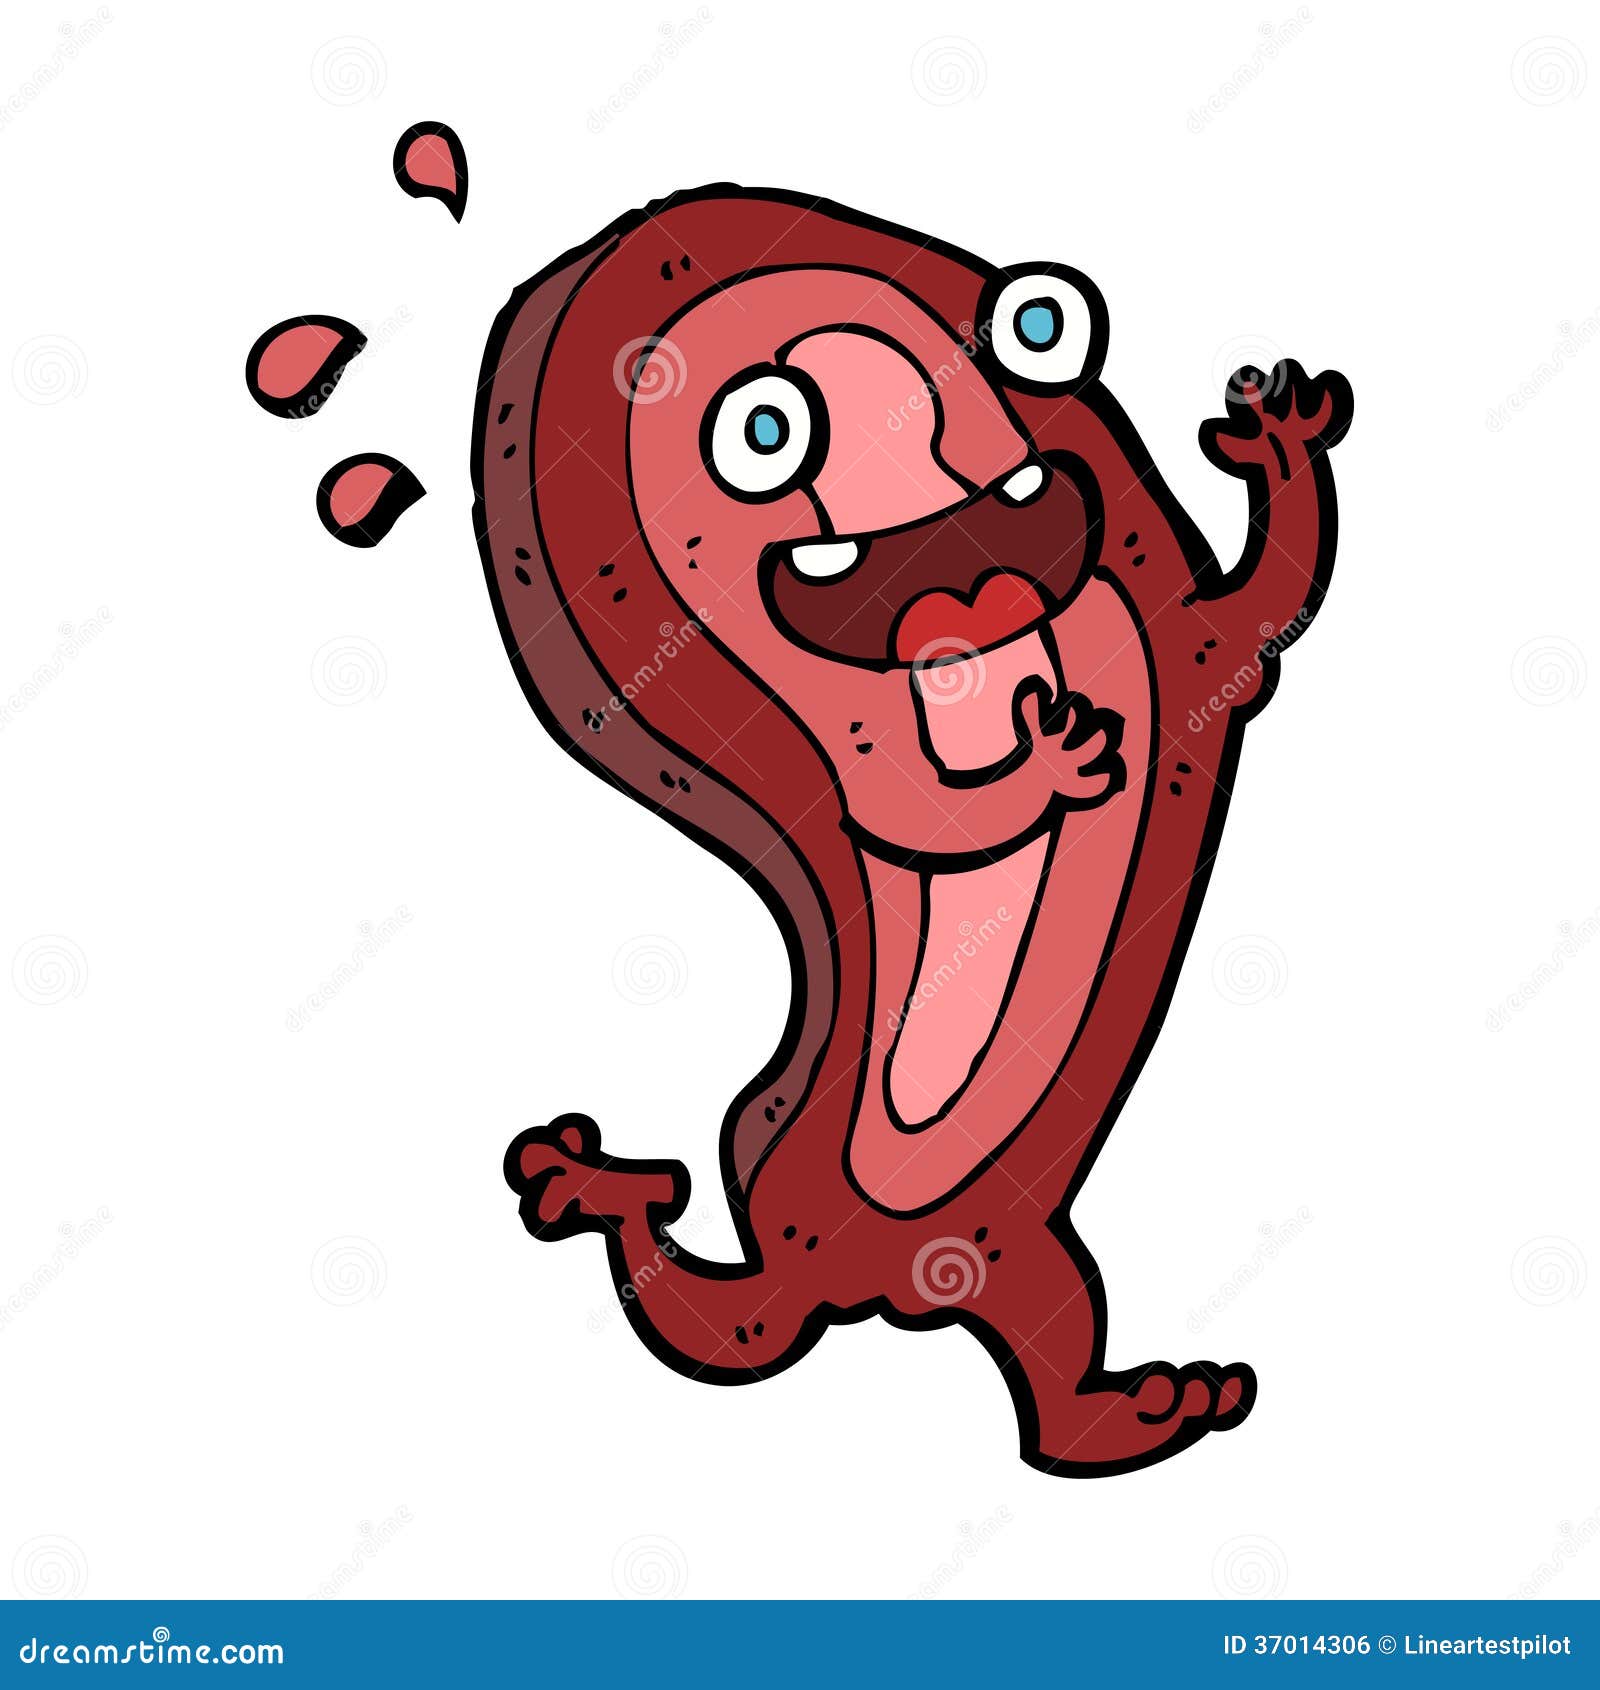 Meat cartoon character stock vector. Illustration of insane - 37014306